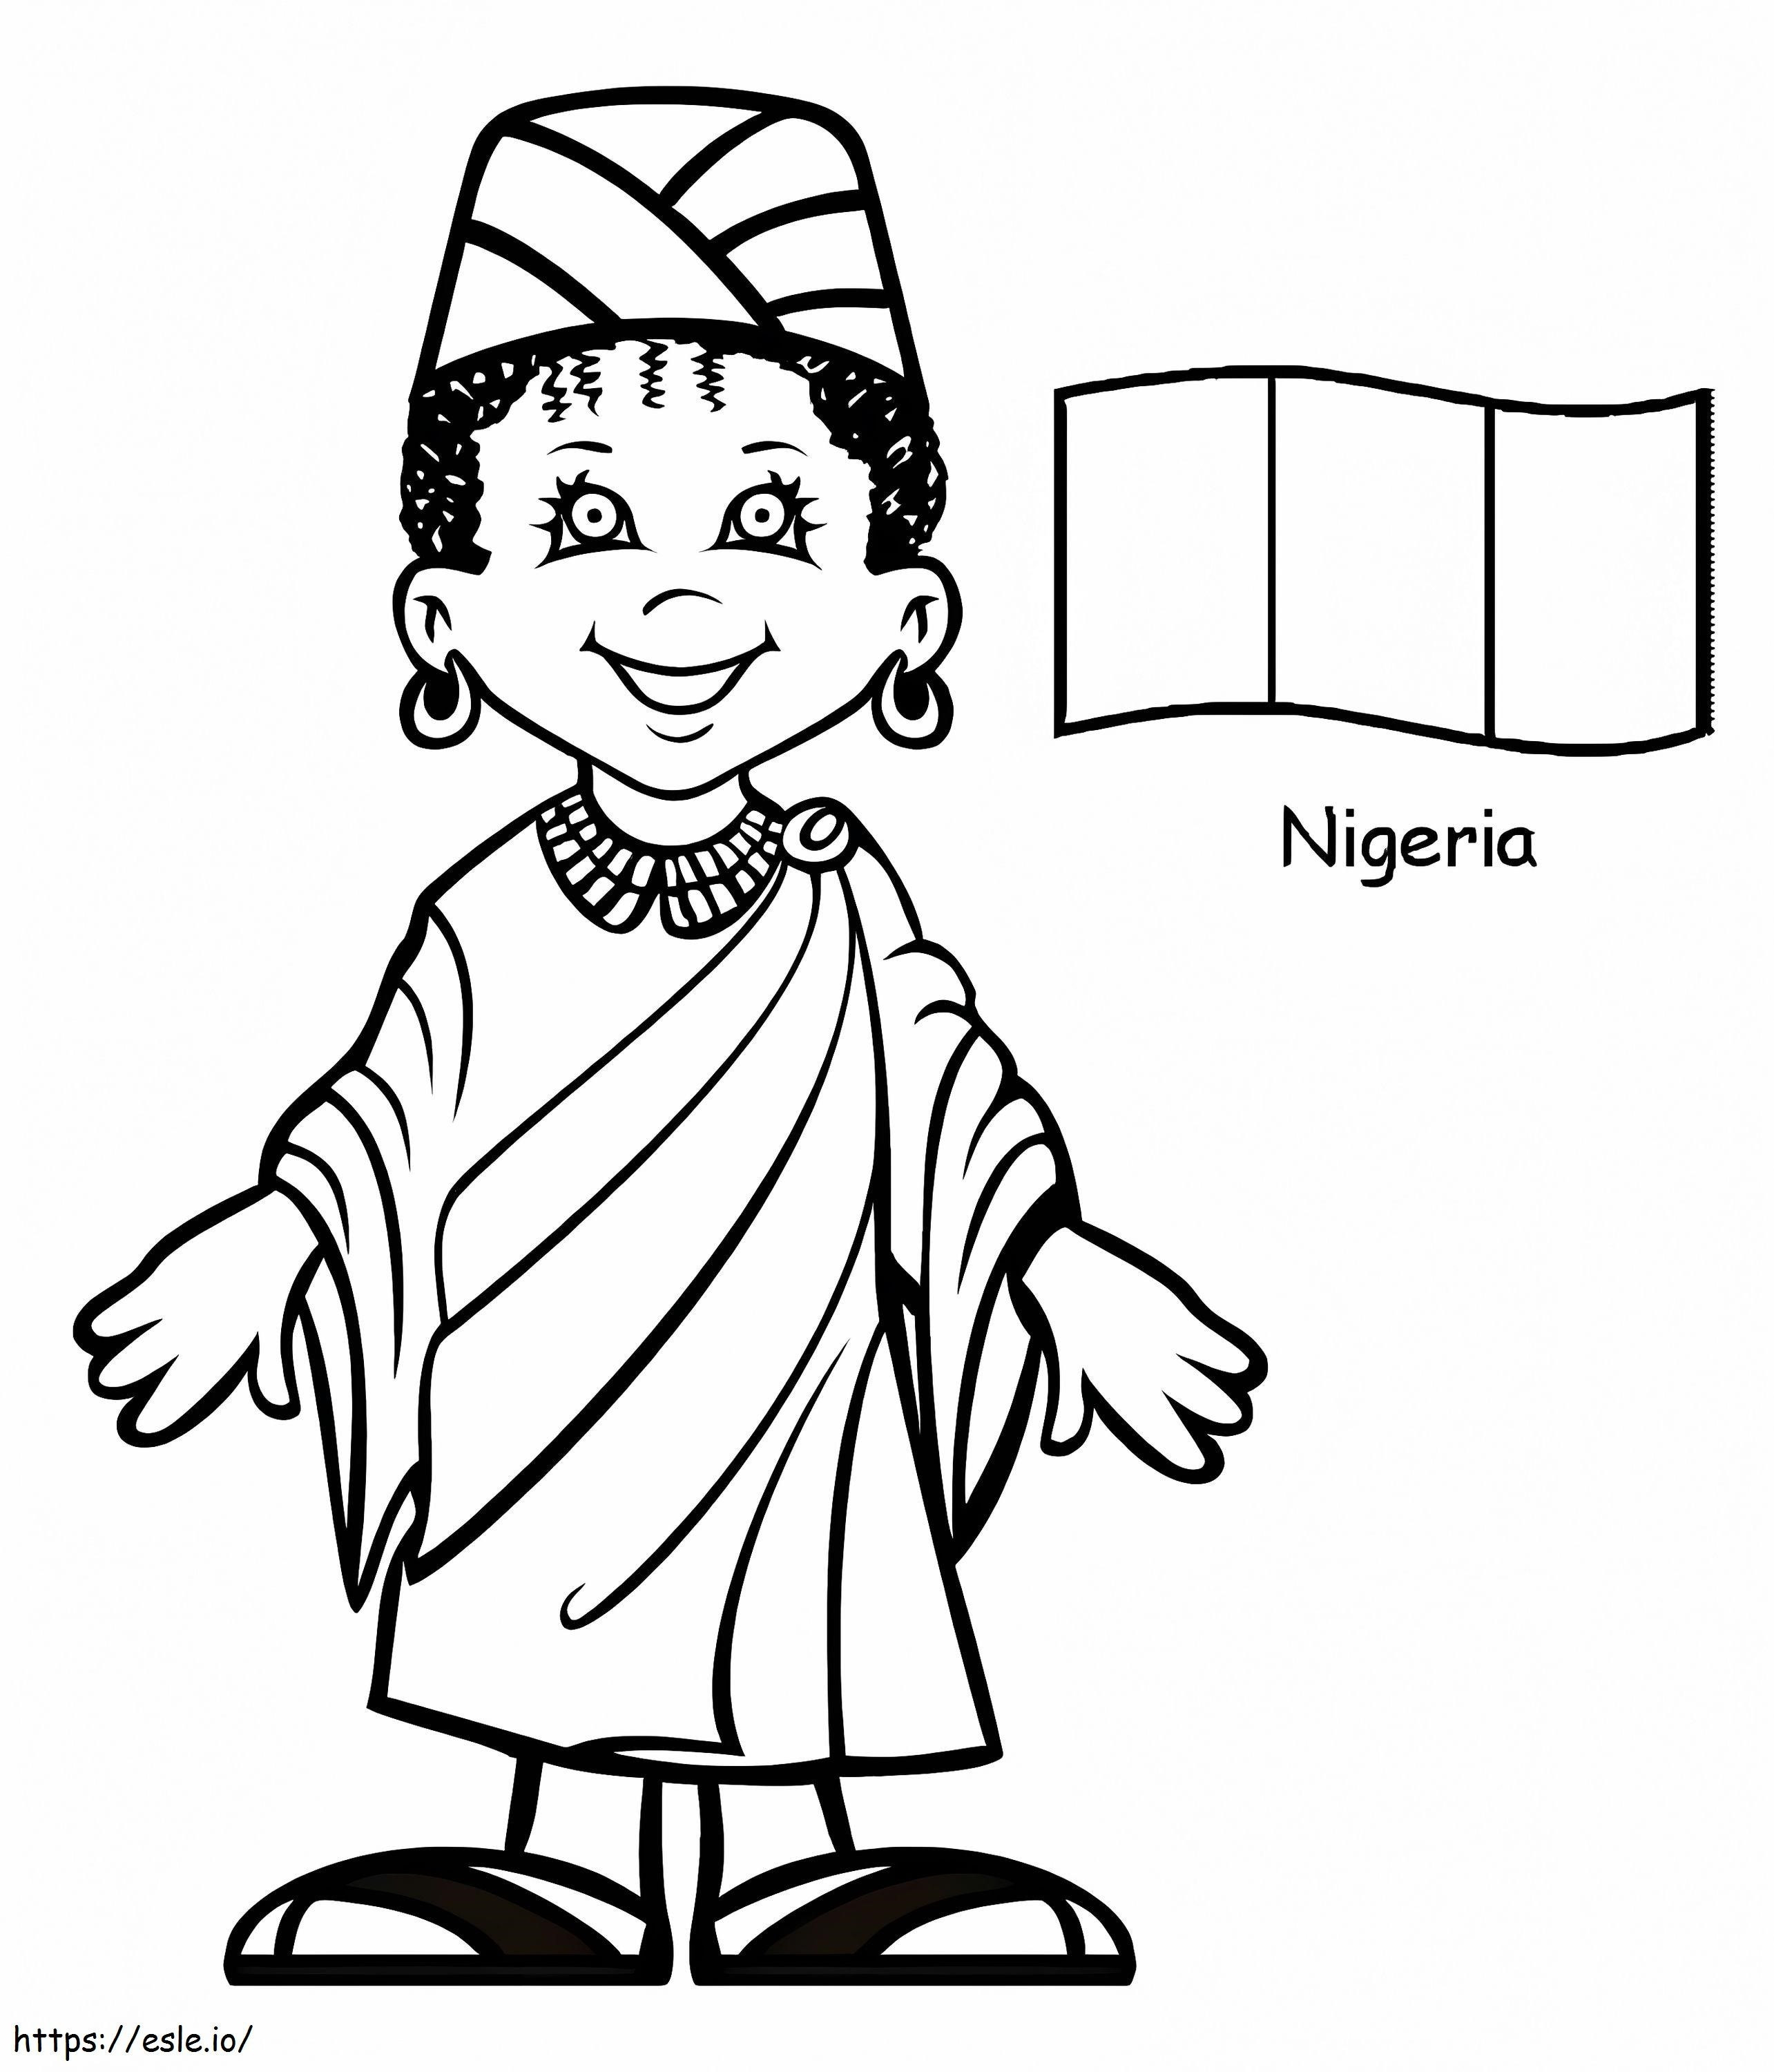 Nigerian 1 coloring page